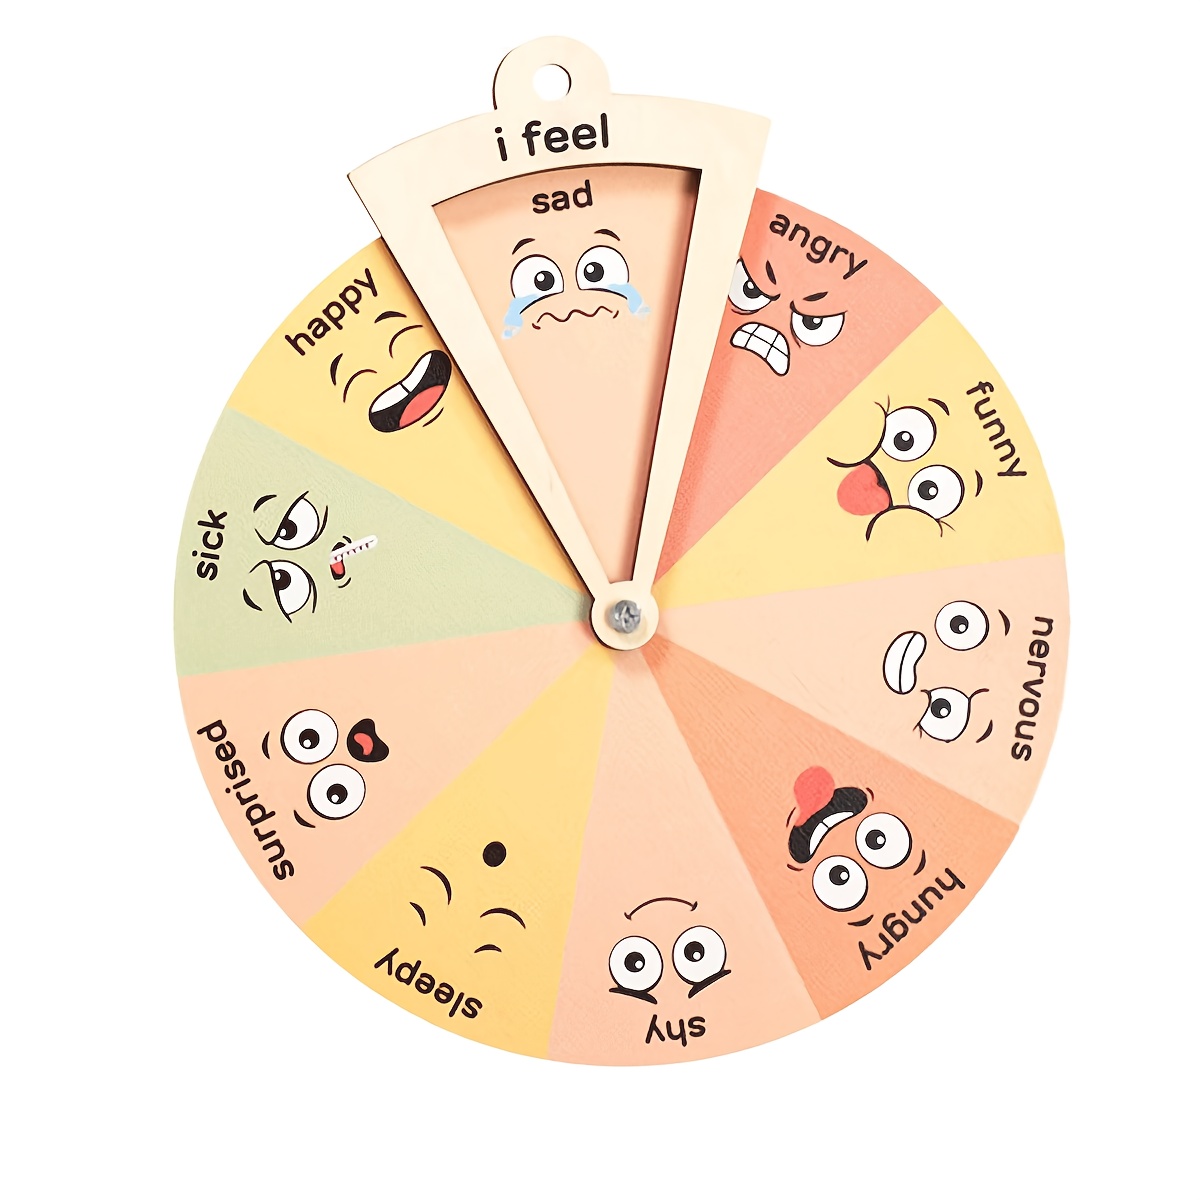 

1pc Wood Emotional Compass, Wooden Feelings Wheels Mood Wheel, Turn It Around, Express Emotions Intelligently, Manage Emotions, Wood Craft